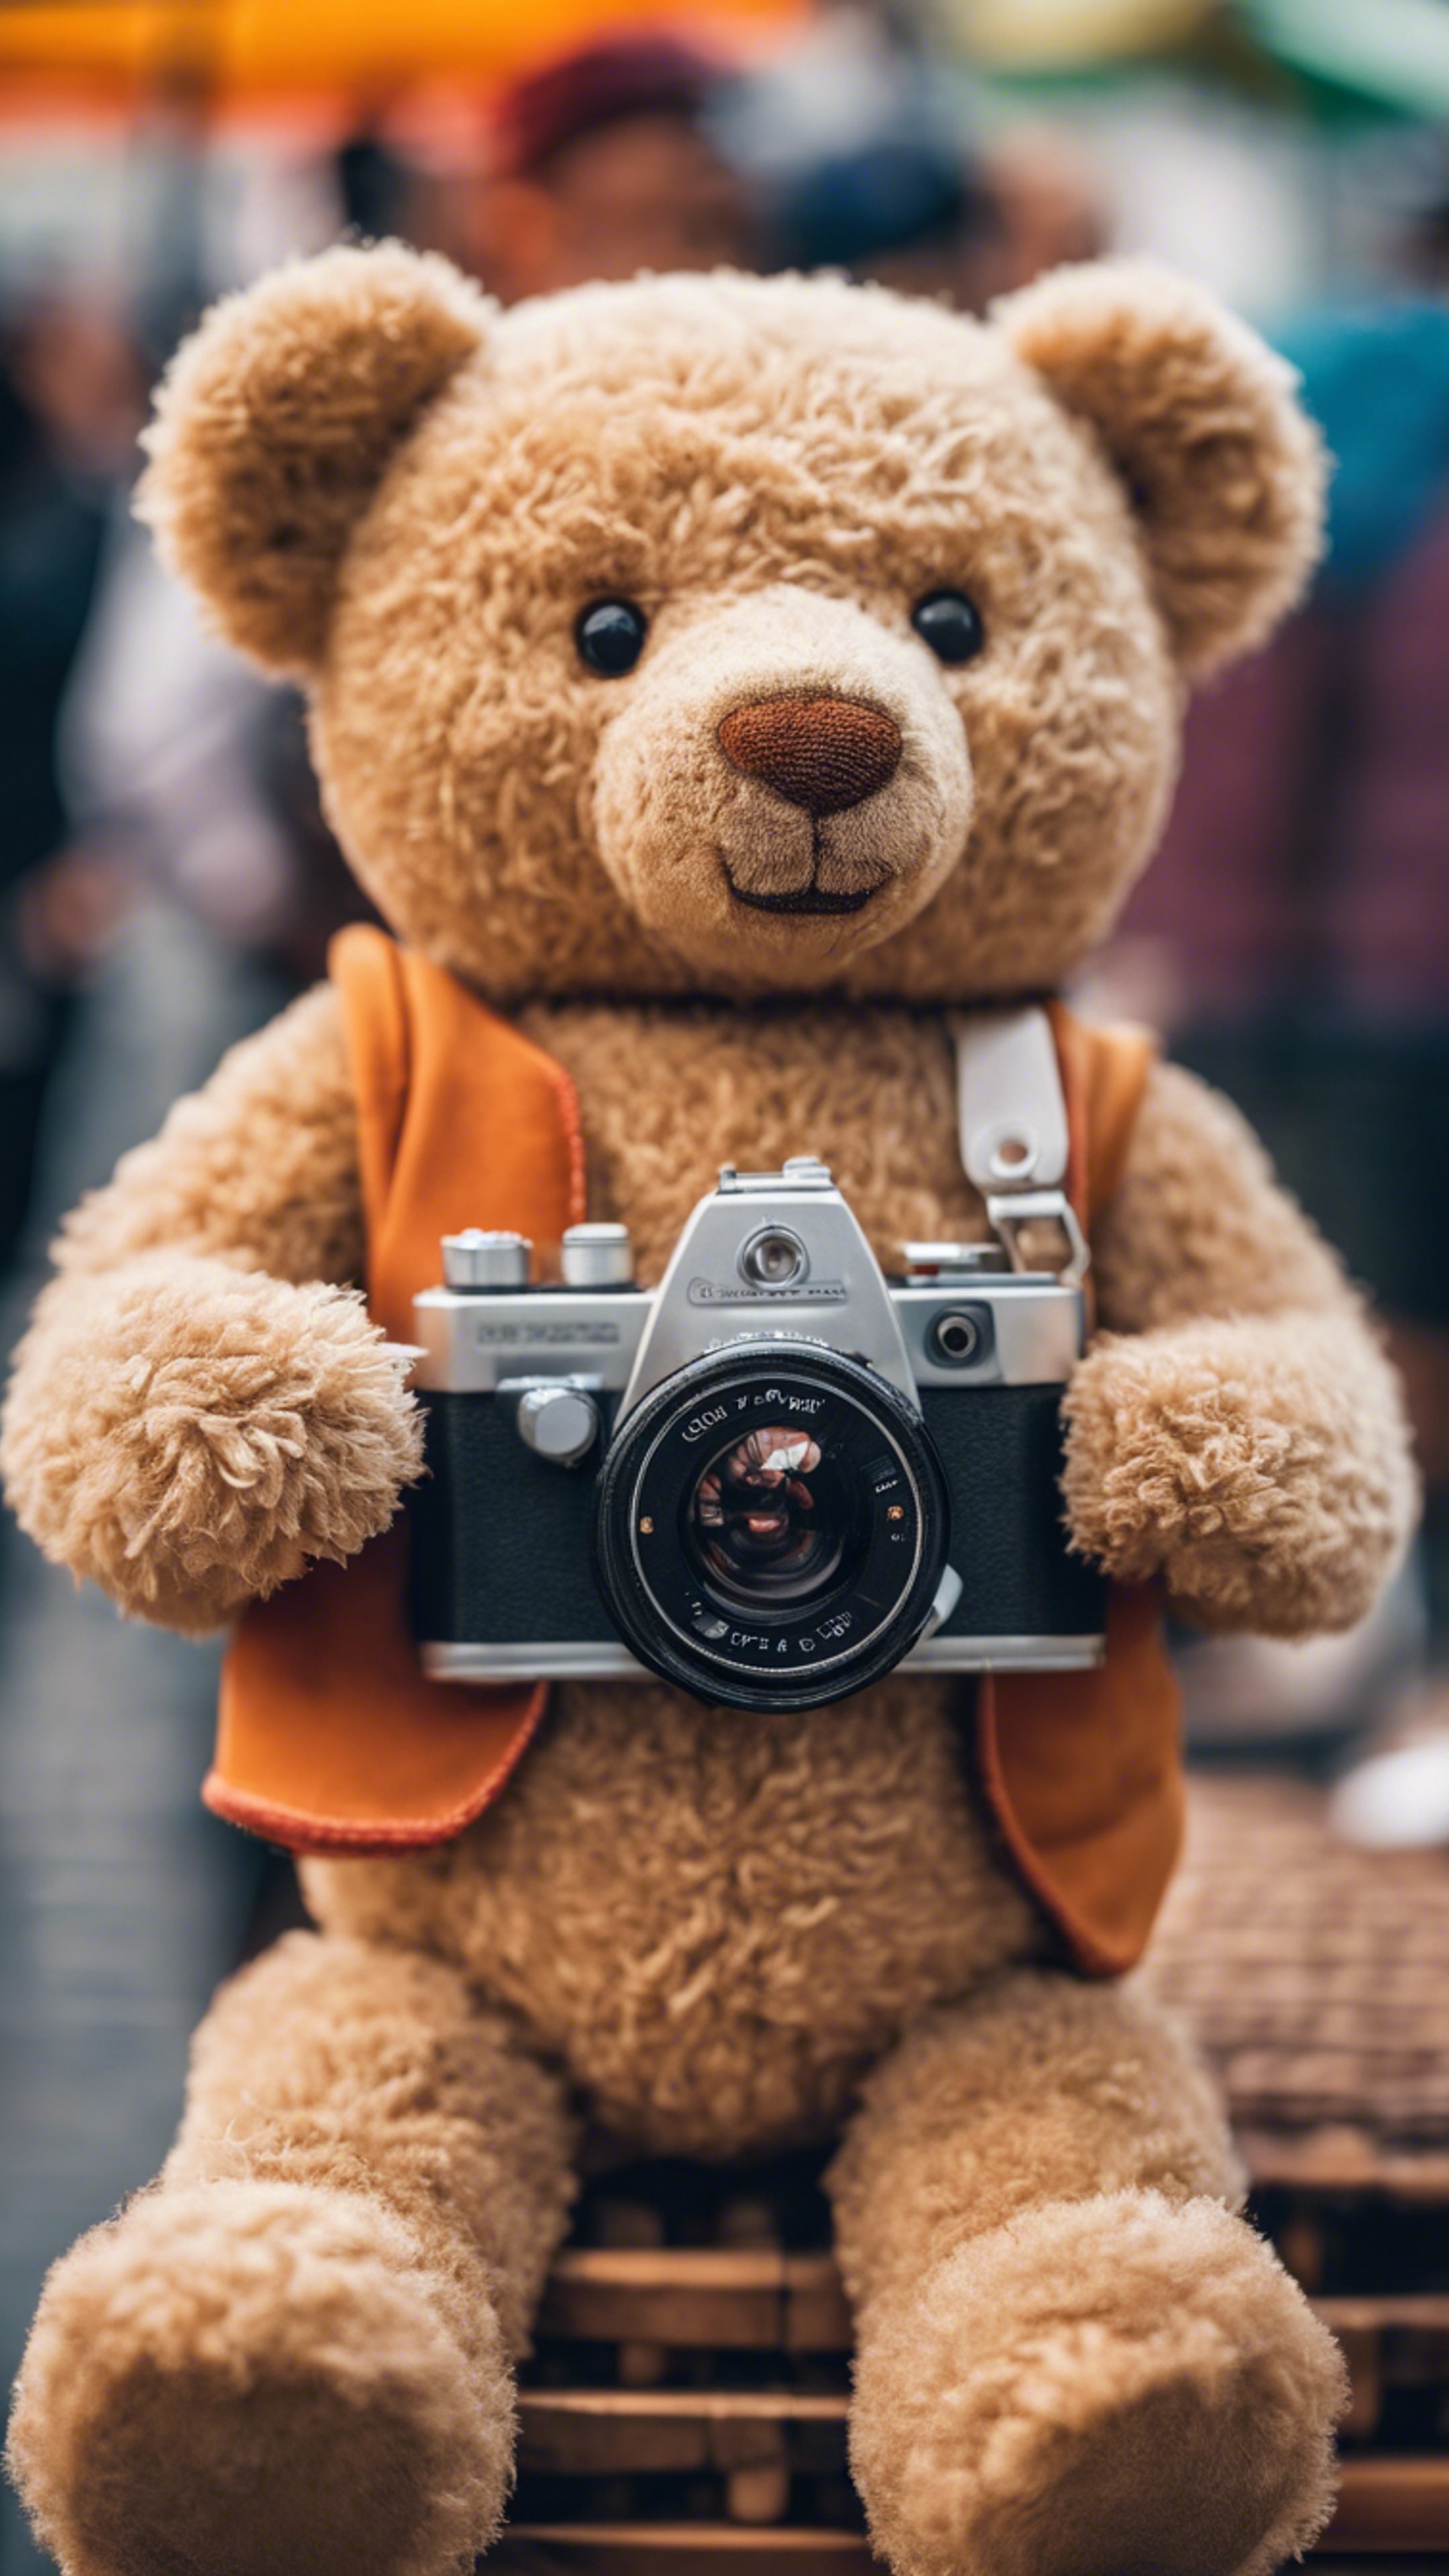 A teddy bear photography hobbyist, holding a toy camera, stood amidst a vibrant street fair. Tapet[6bbb7c06ef4c4008bbb6]